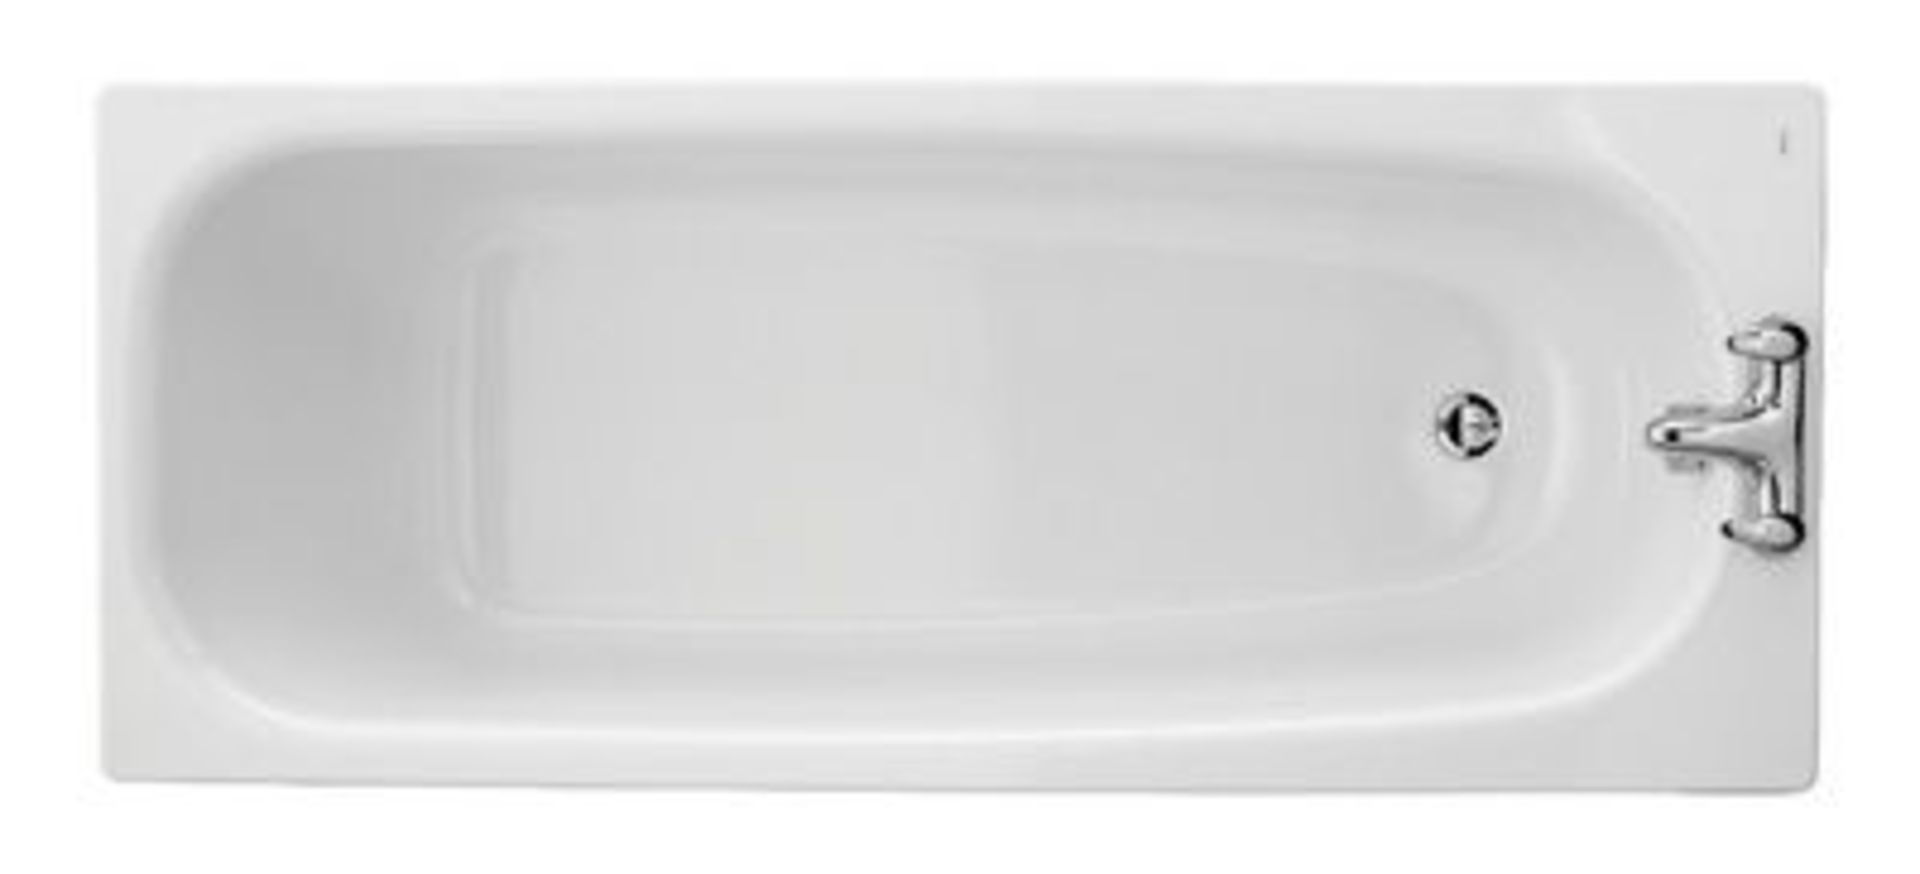 NEW (MR98)Twyford Neptune 2 tap hole standard bath 1700 x 700mm White. RRP £340.99.Twyford Ne... - Image 4 of 4